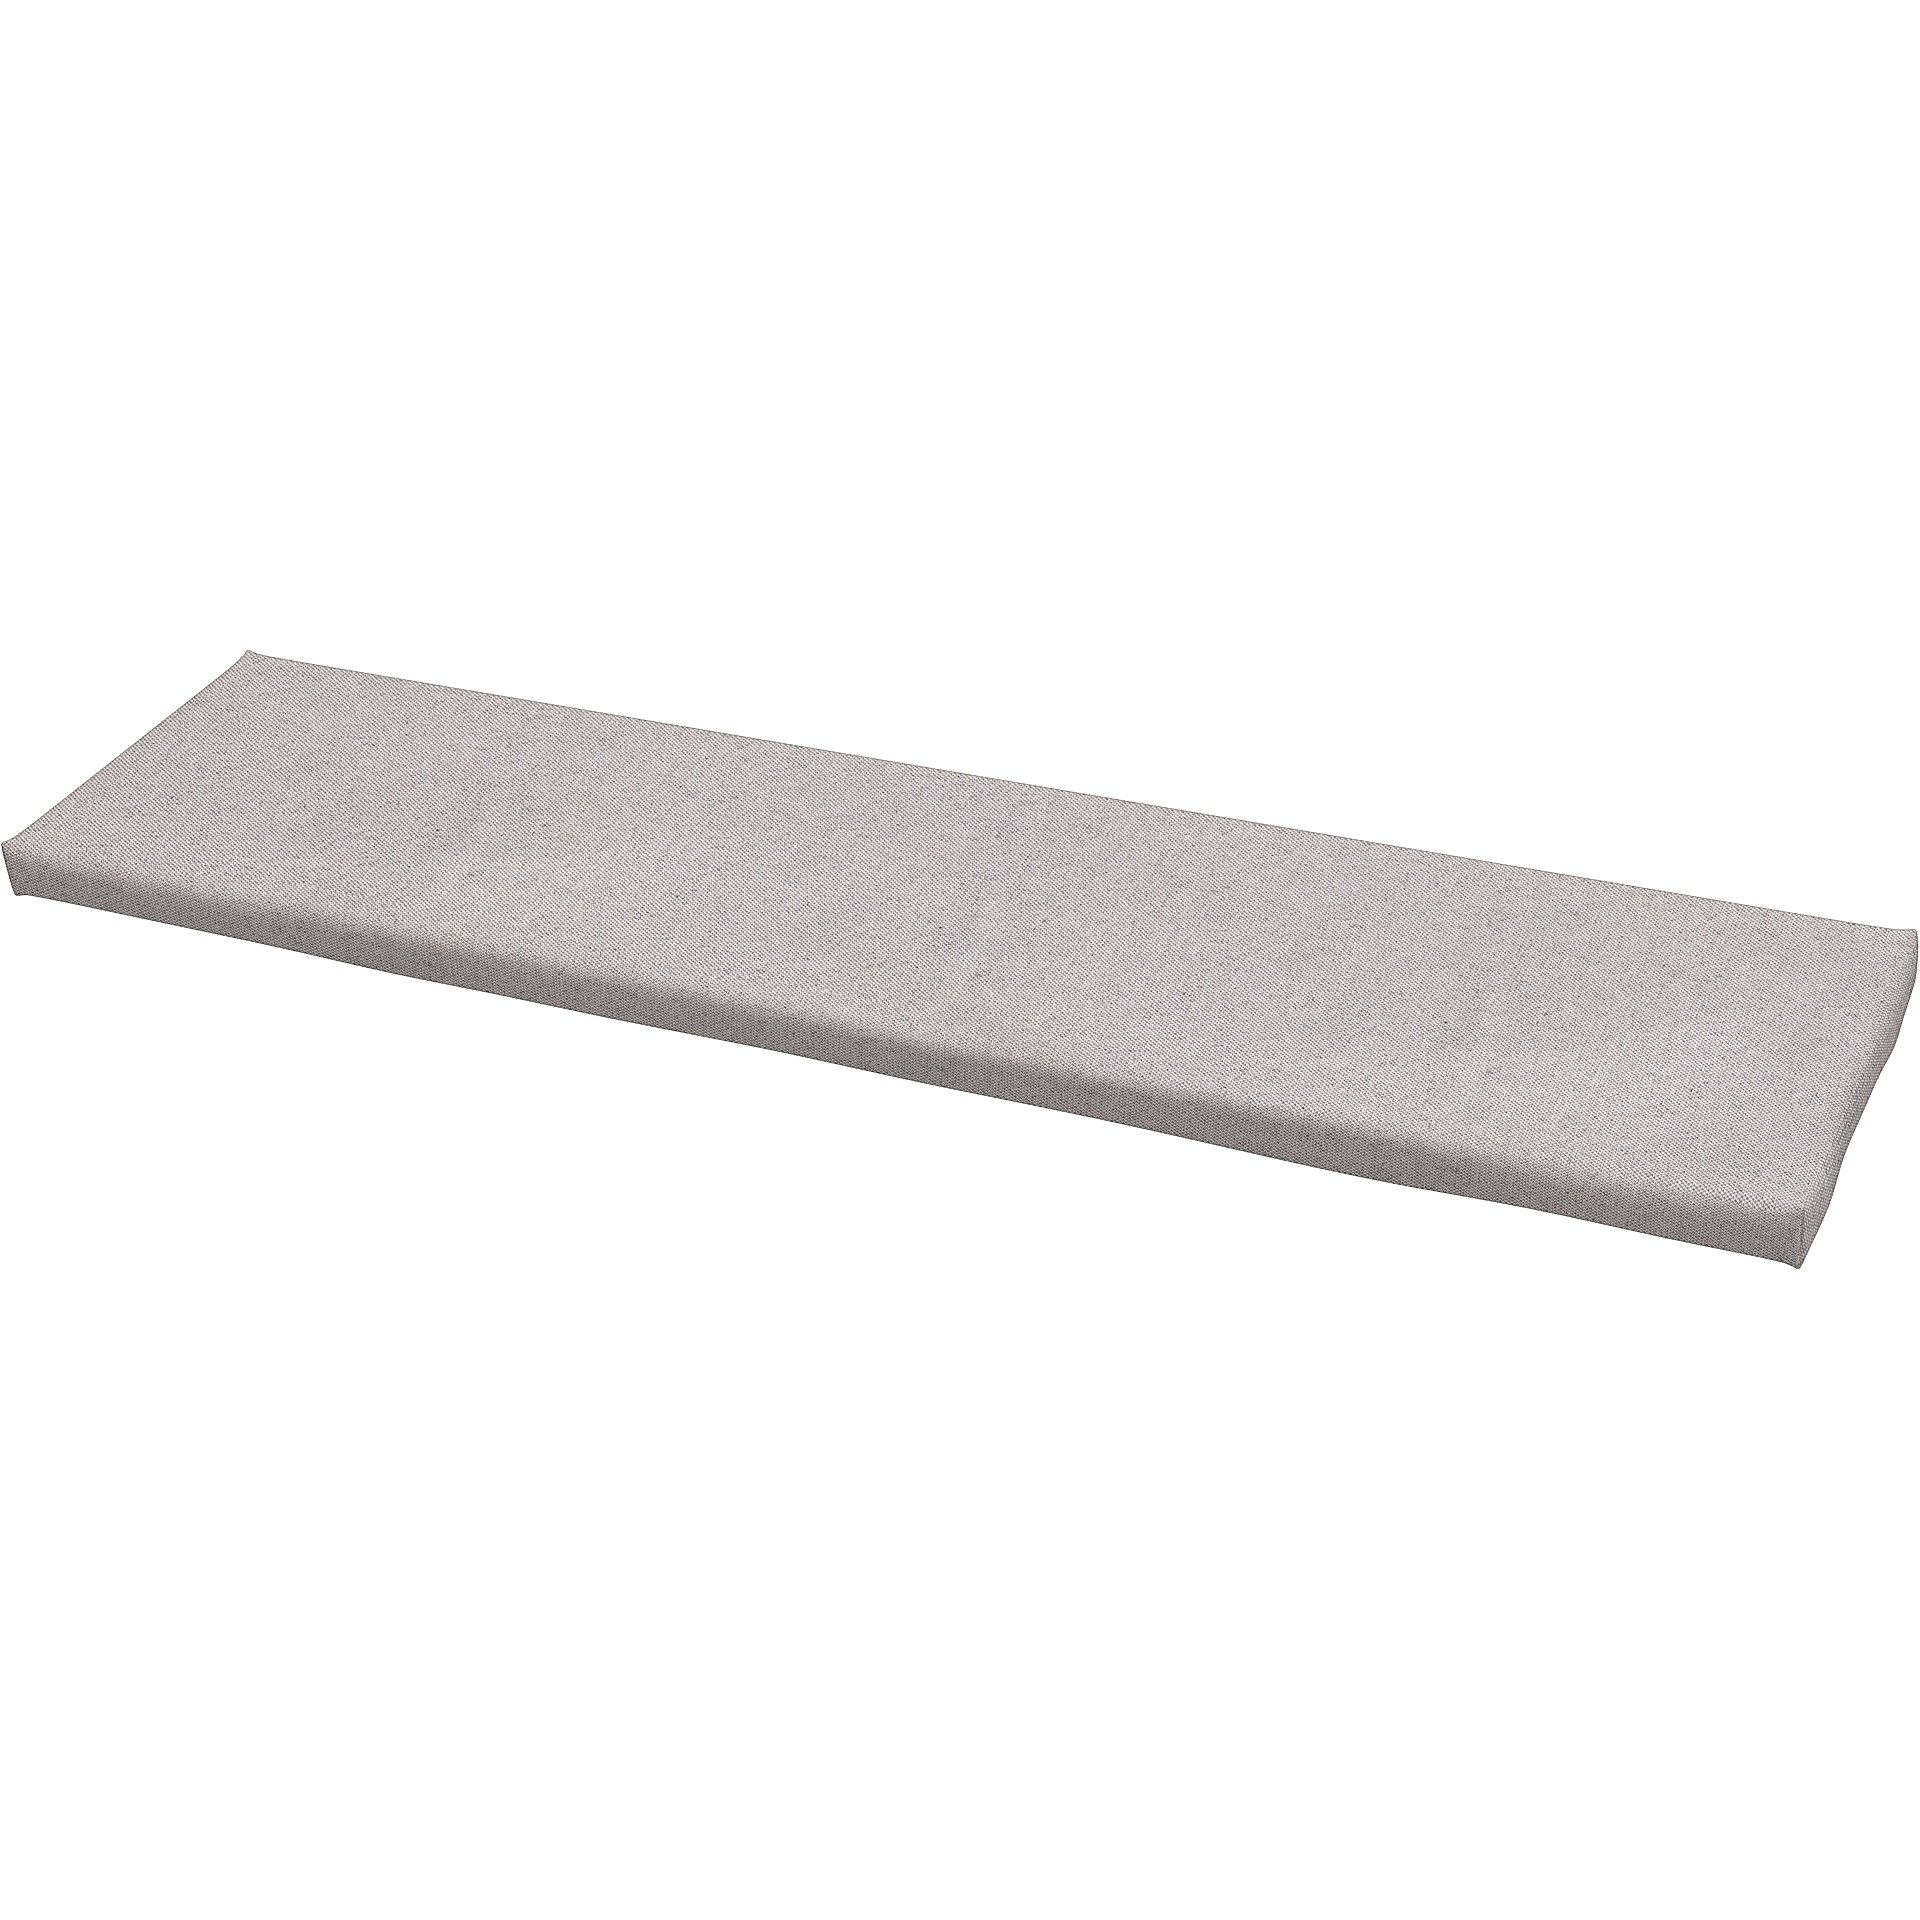 IKEA - Universal bench cushion cover 140x35x3,5 cm, Natural, Cotton - Bemz